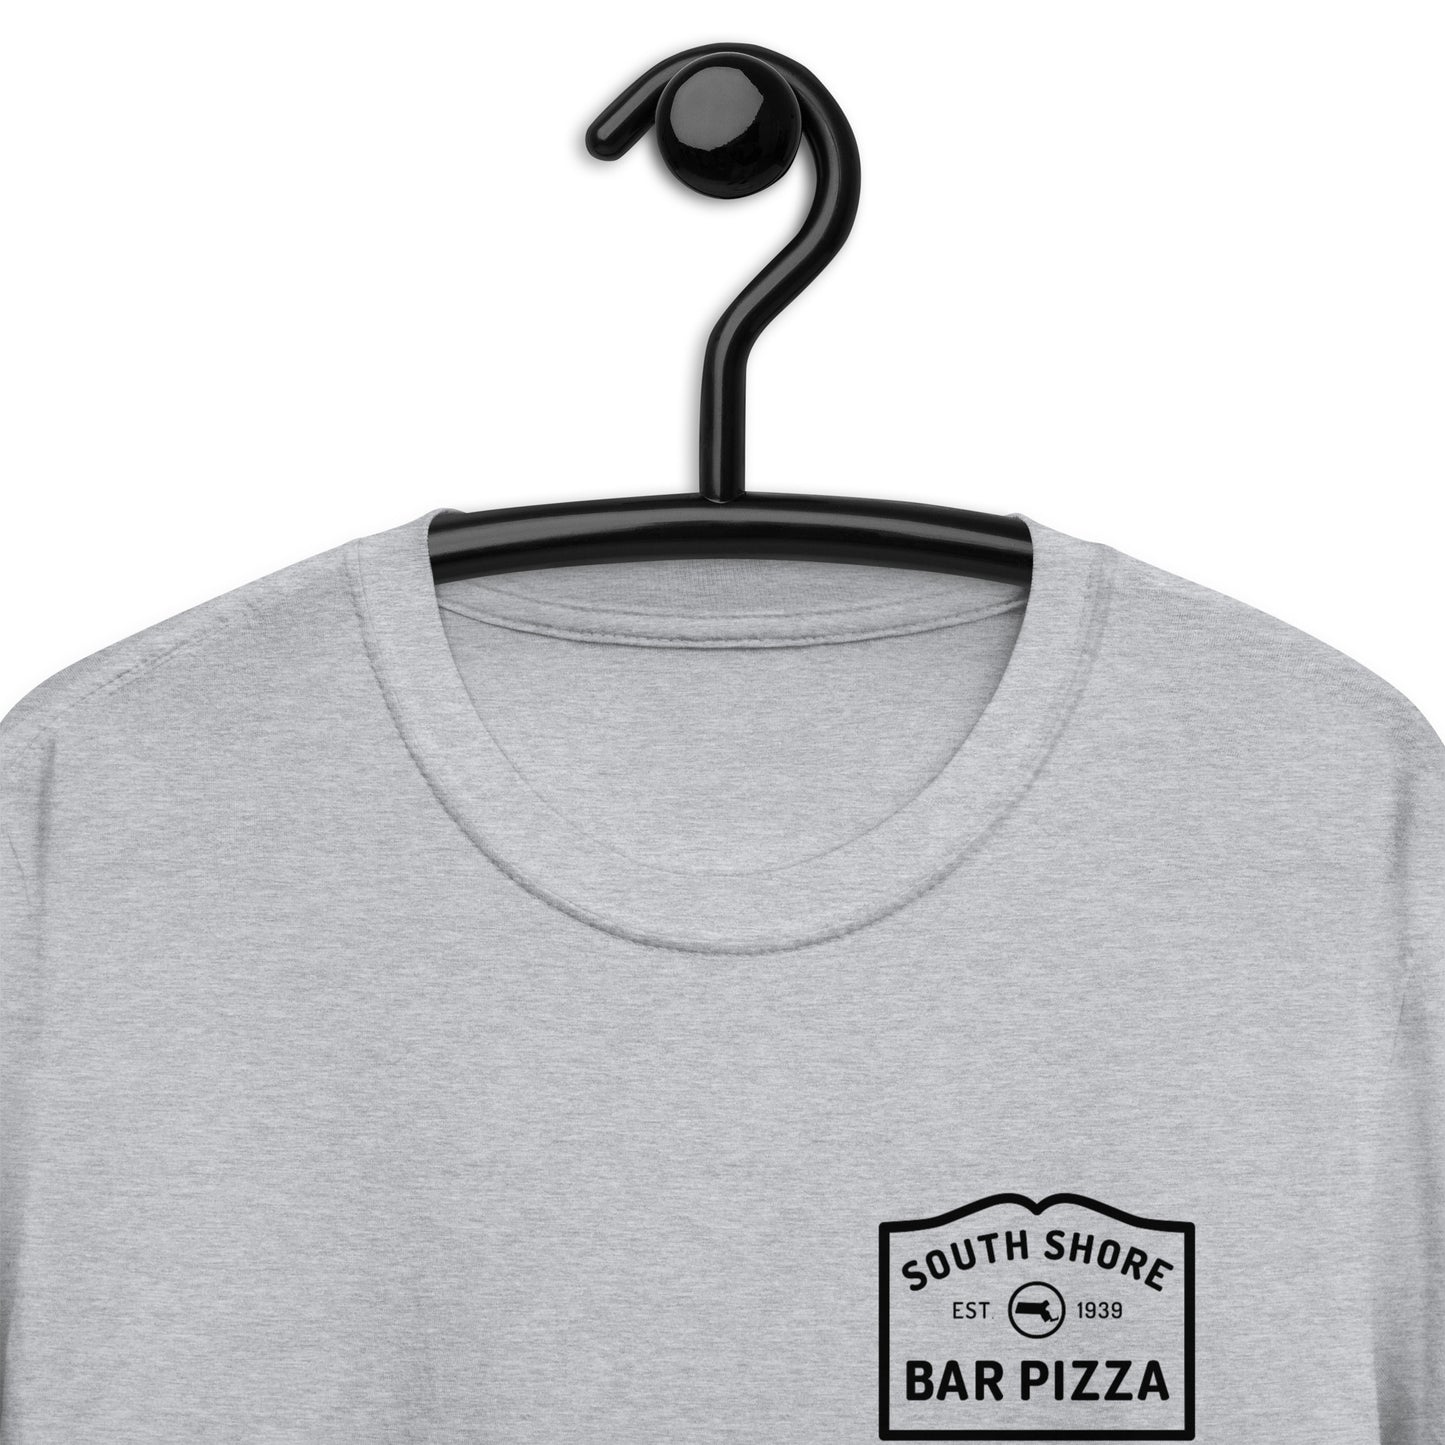 South Shore Bar Pizza - Massachusetts City Town Sign